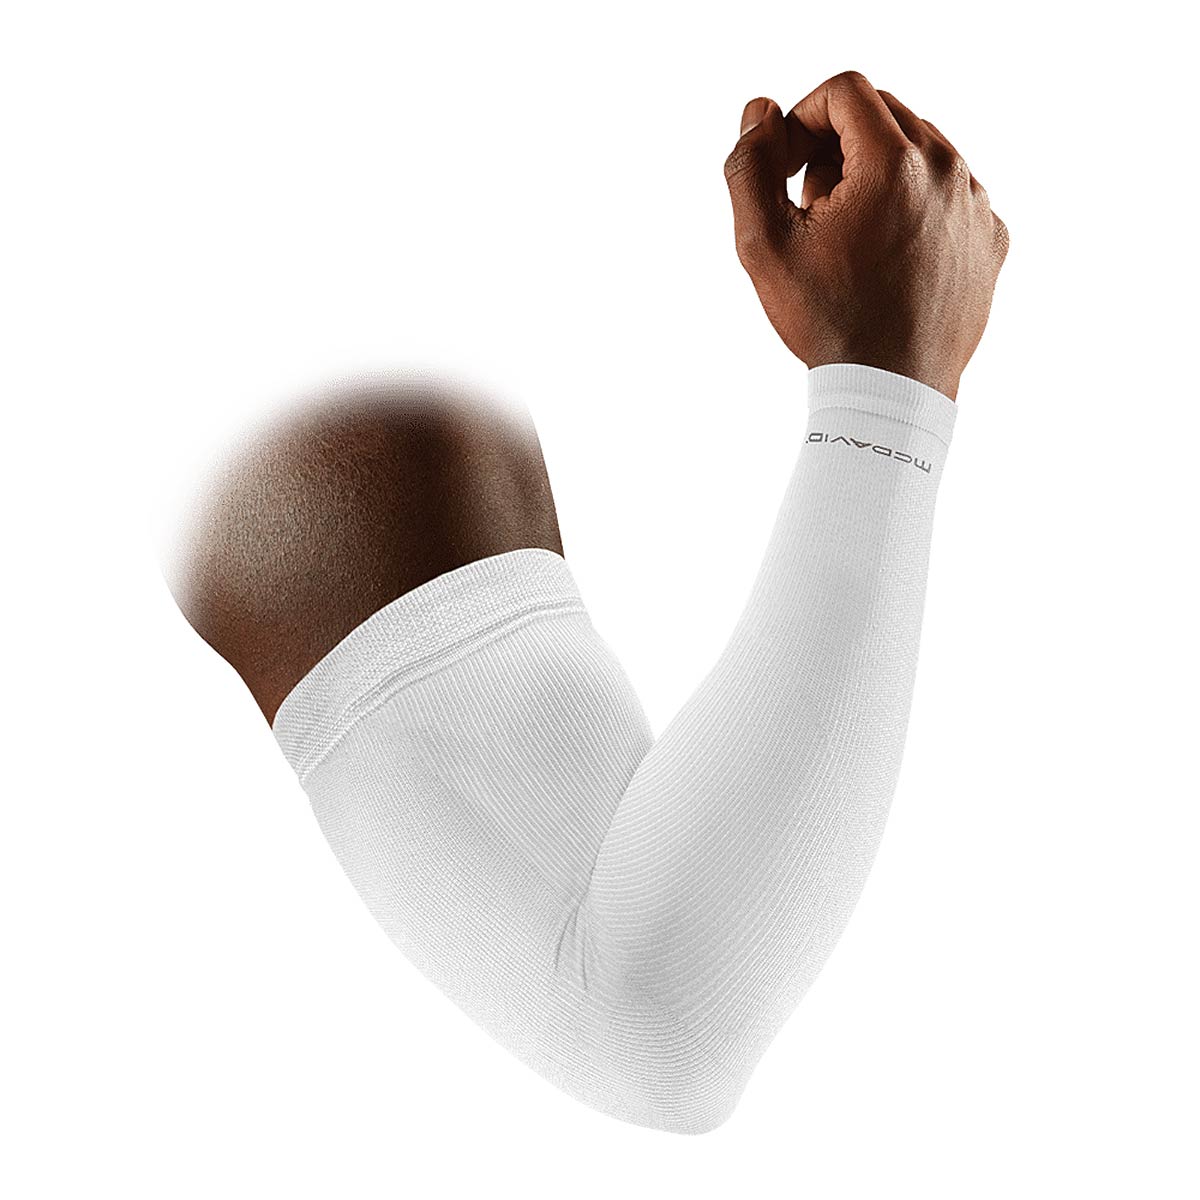 Image of Mcdavid Elite Compression Arm Sleeves Pair, White